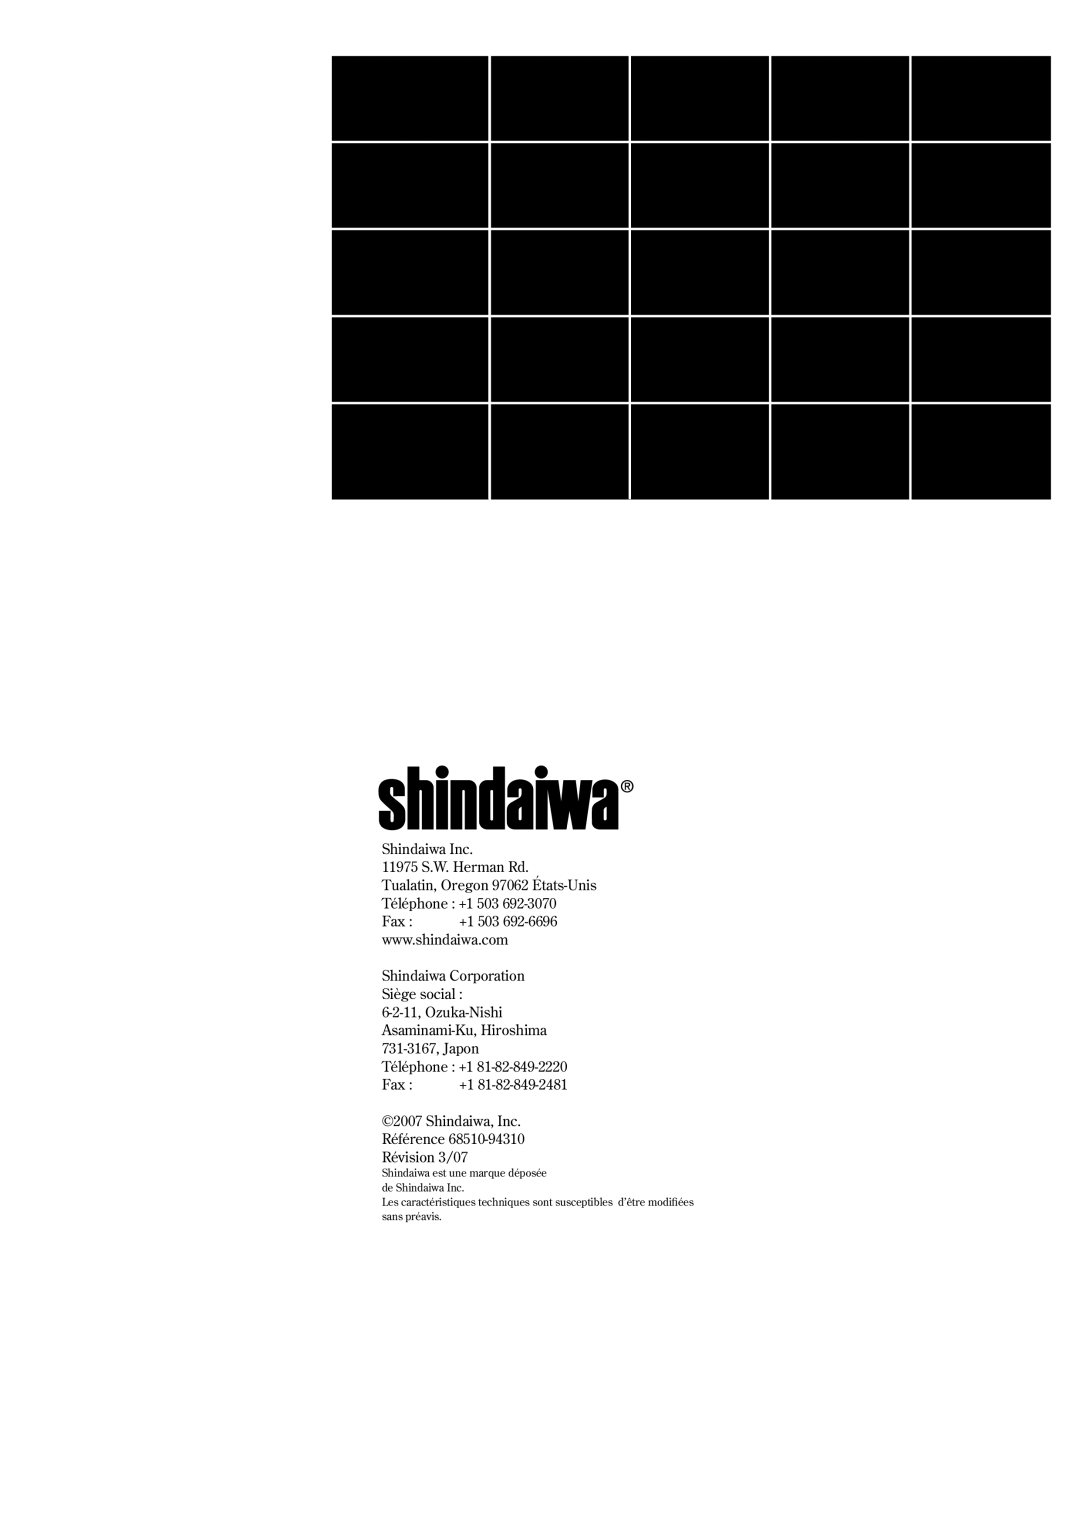 Shindaiwa 6850-9430, GP3410 manual Shindaiwa Inc 11975 S.W. Herman Rd 